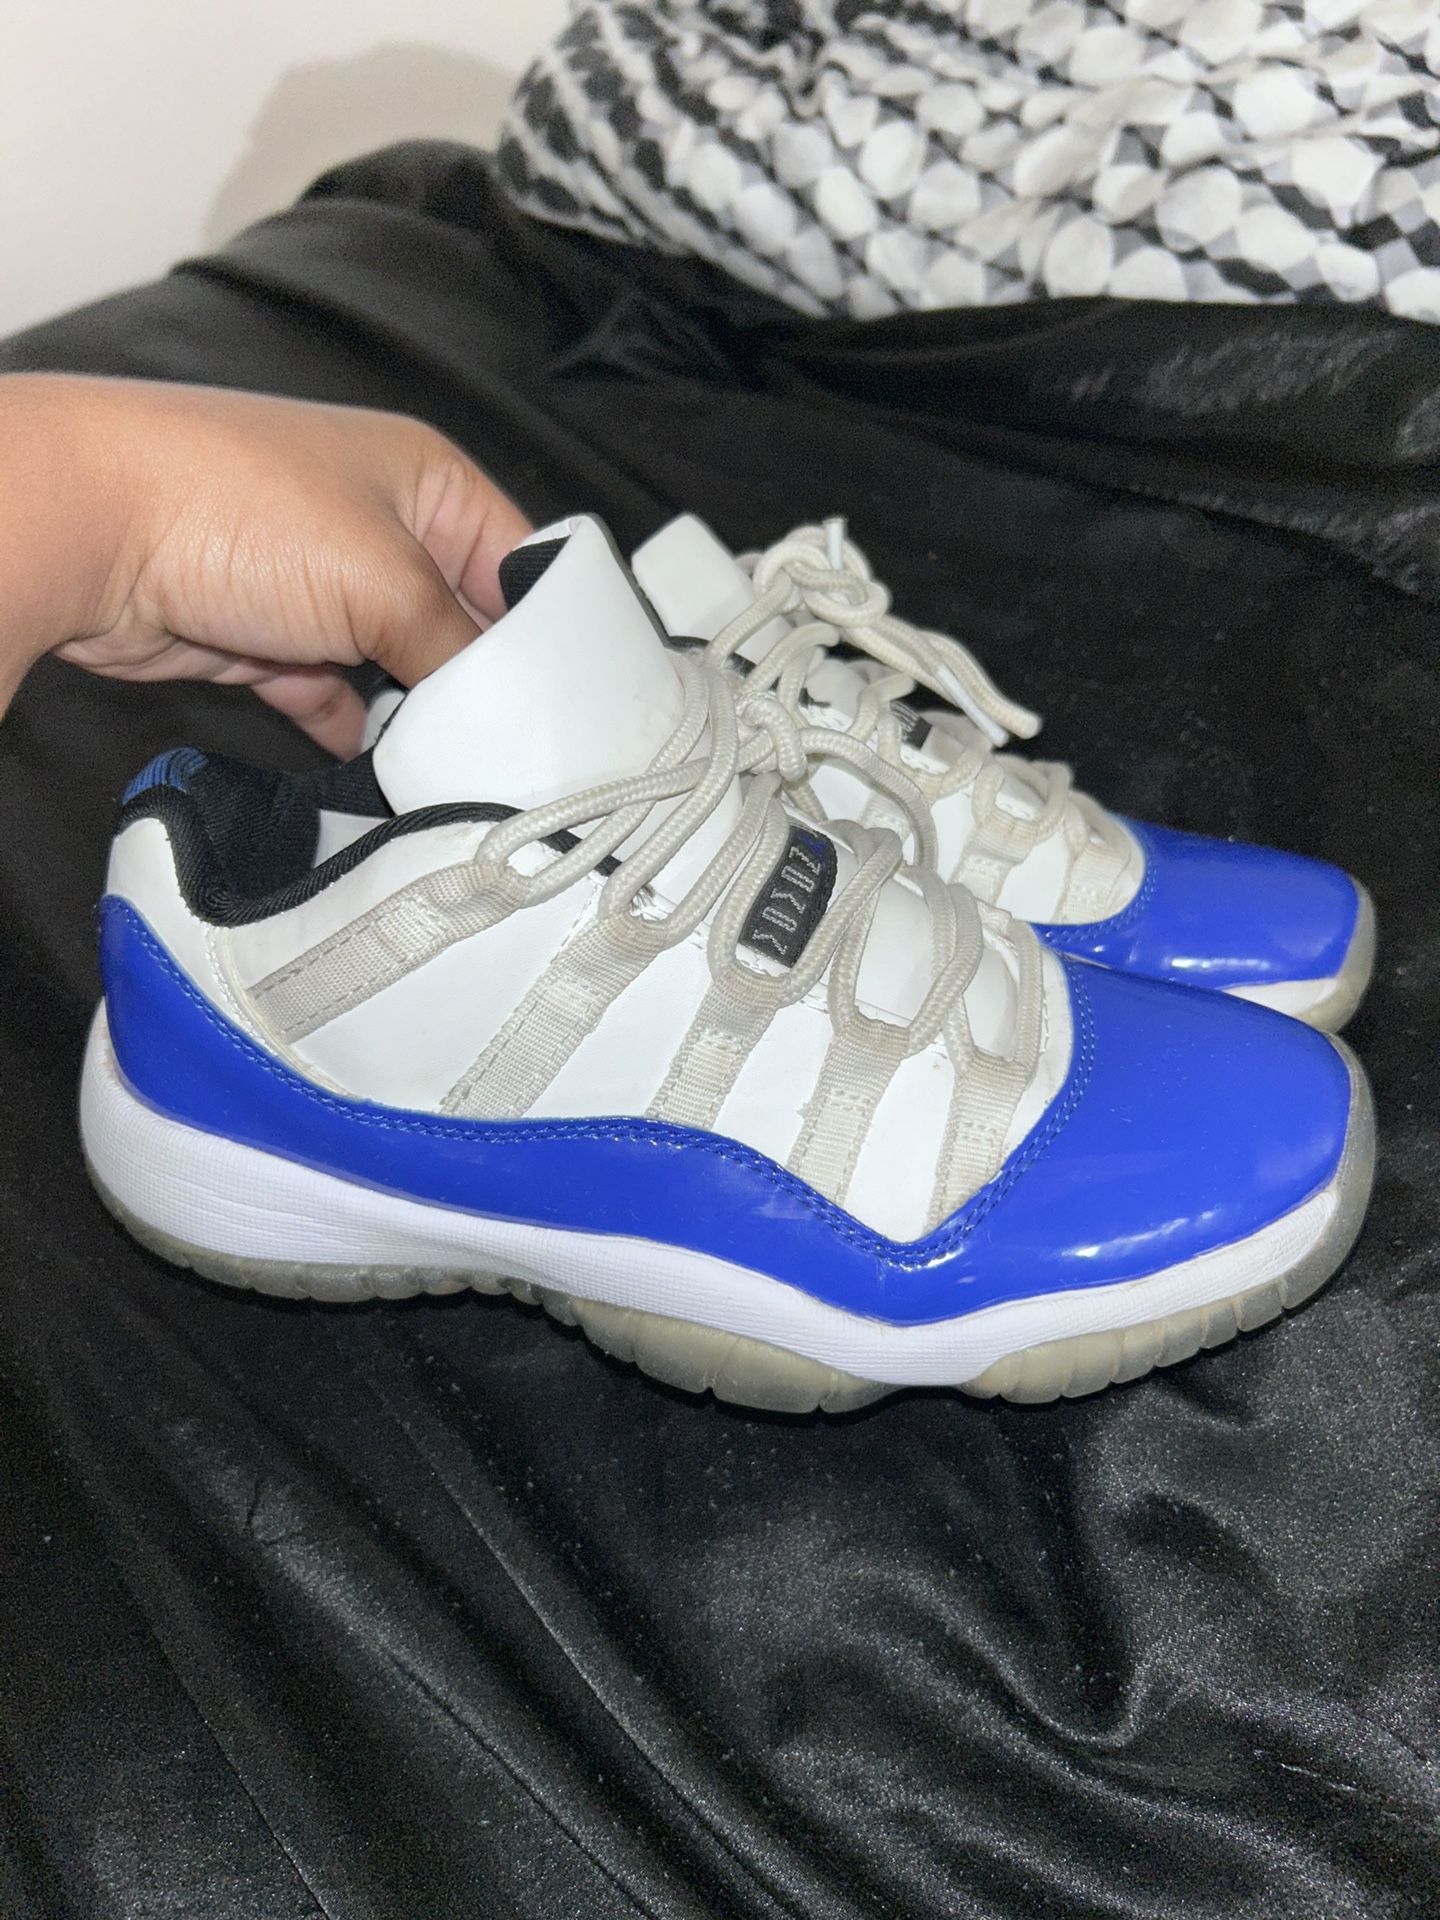 Jordan 11’s retro low concords Size 7